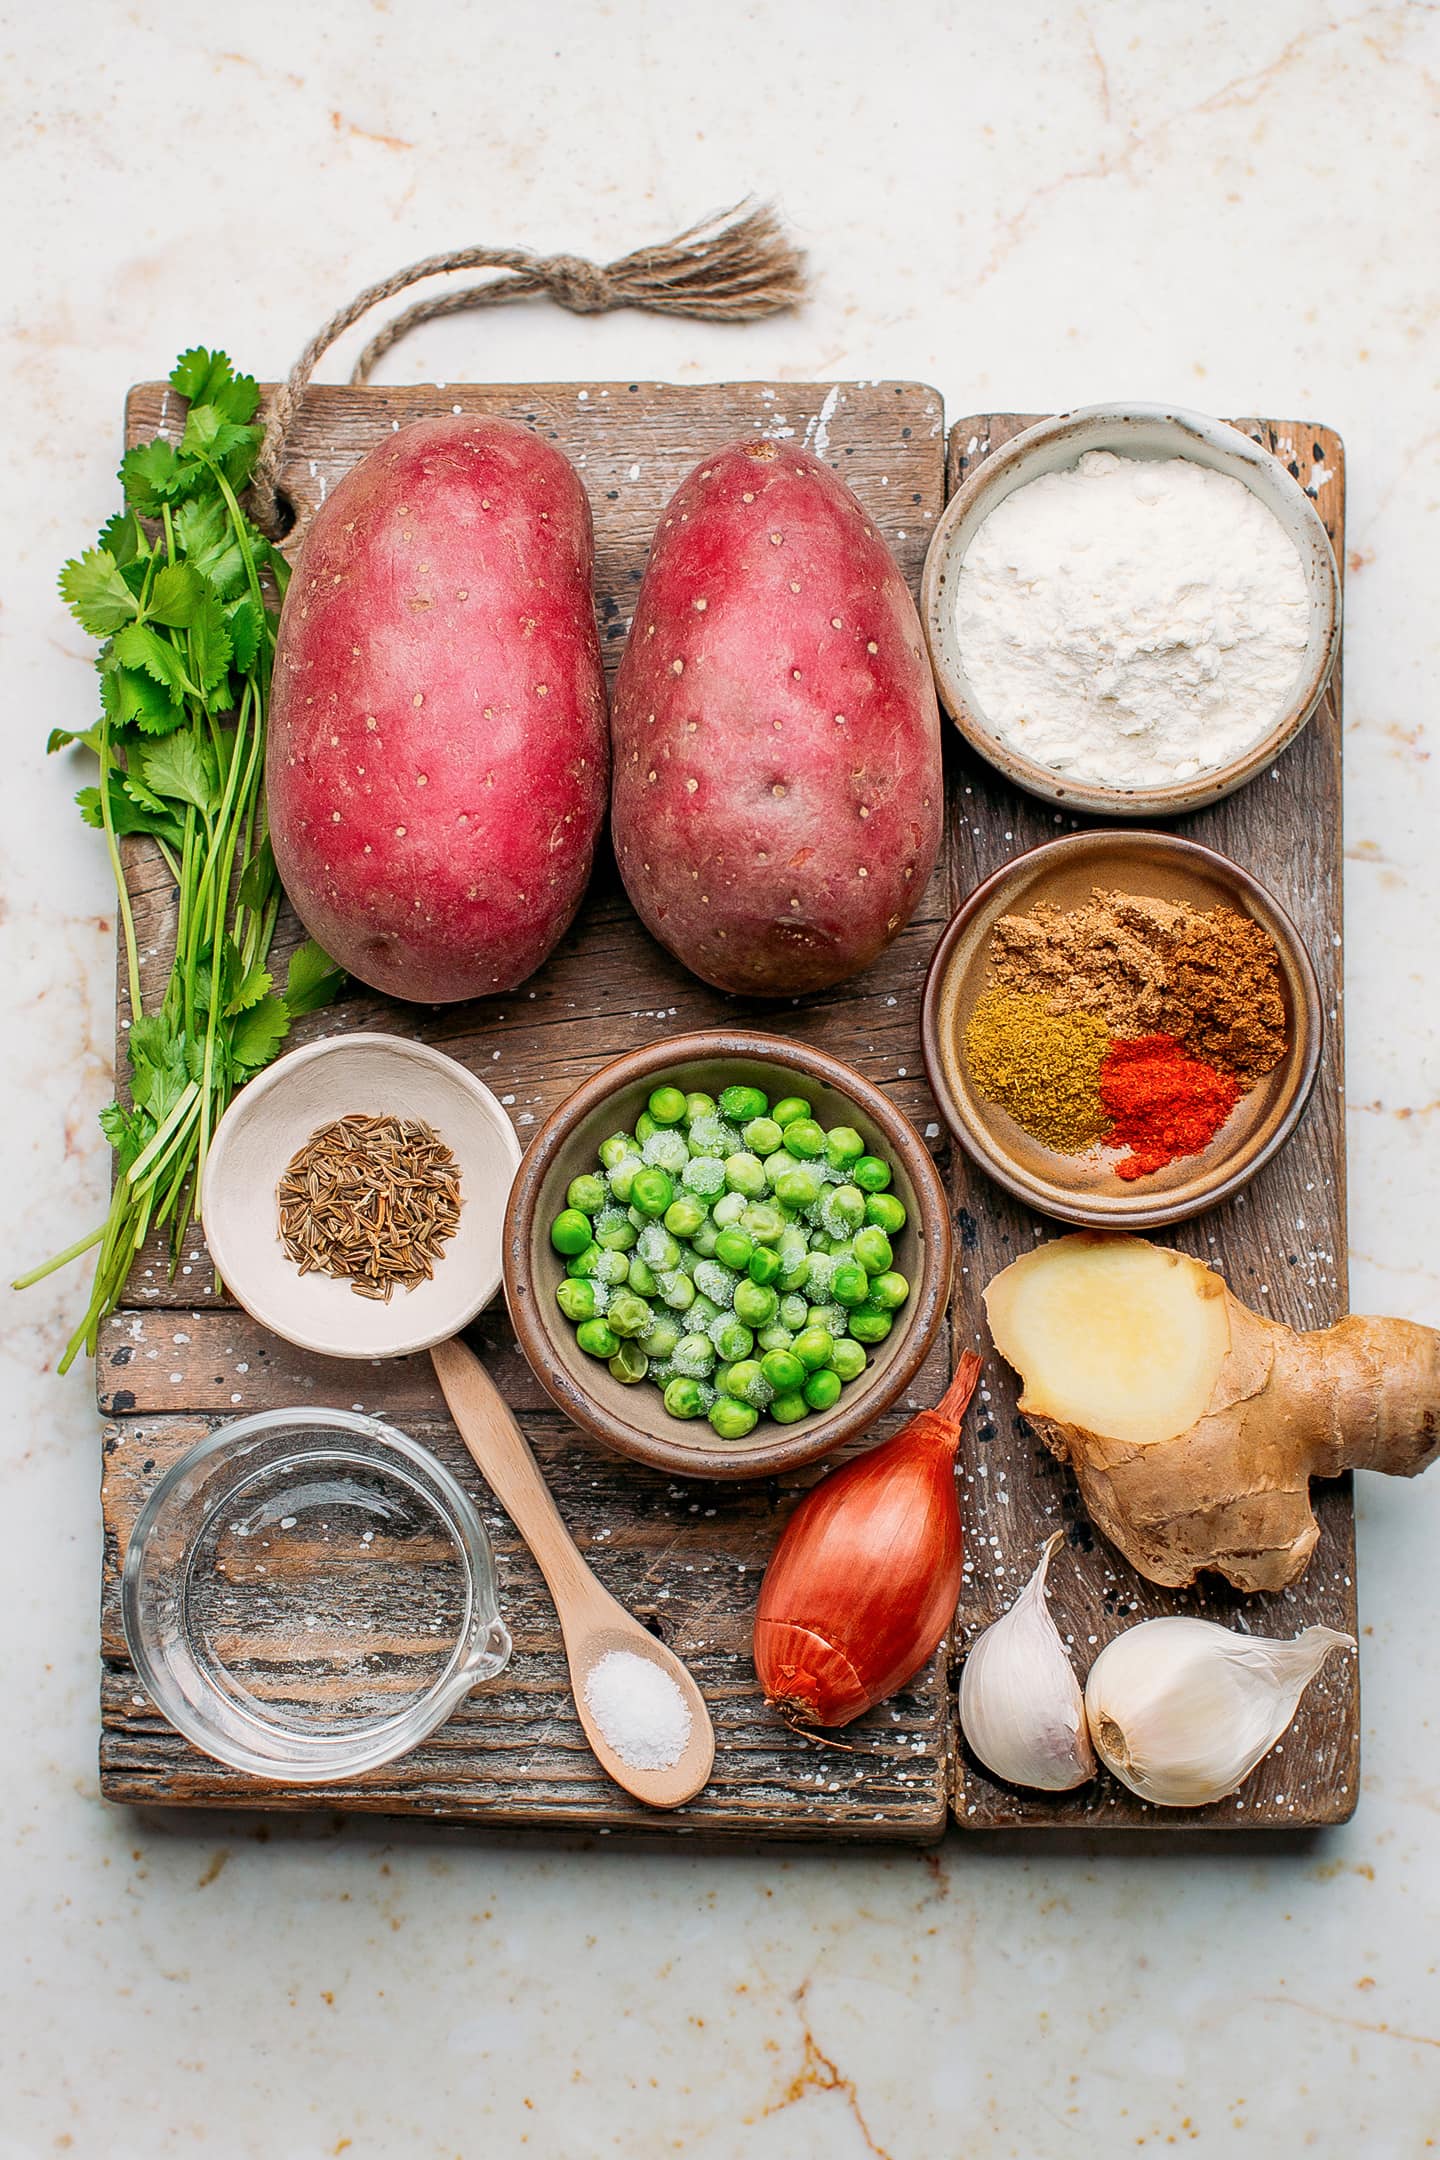 Ingredients like potatoes, green peas, shallots, garlic, and ginger.